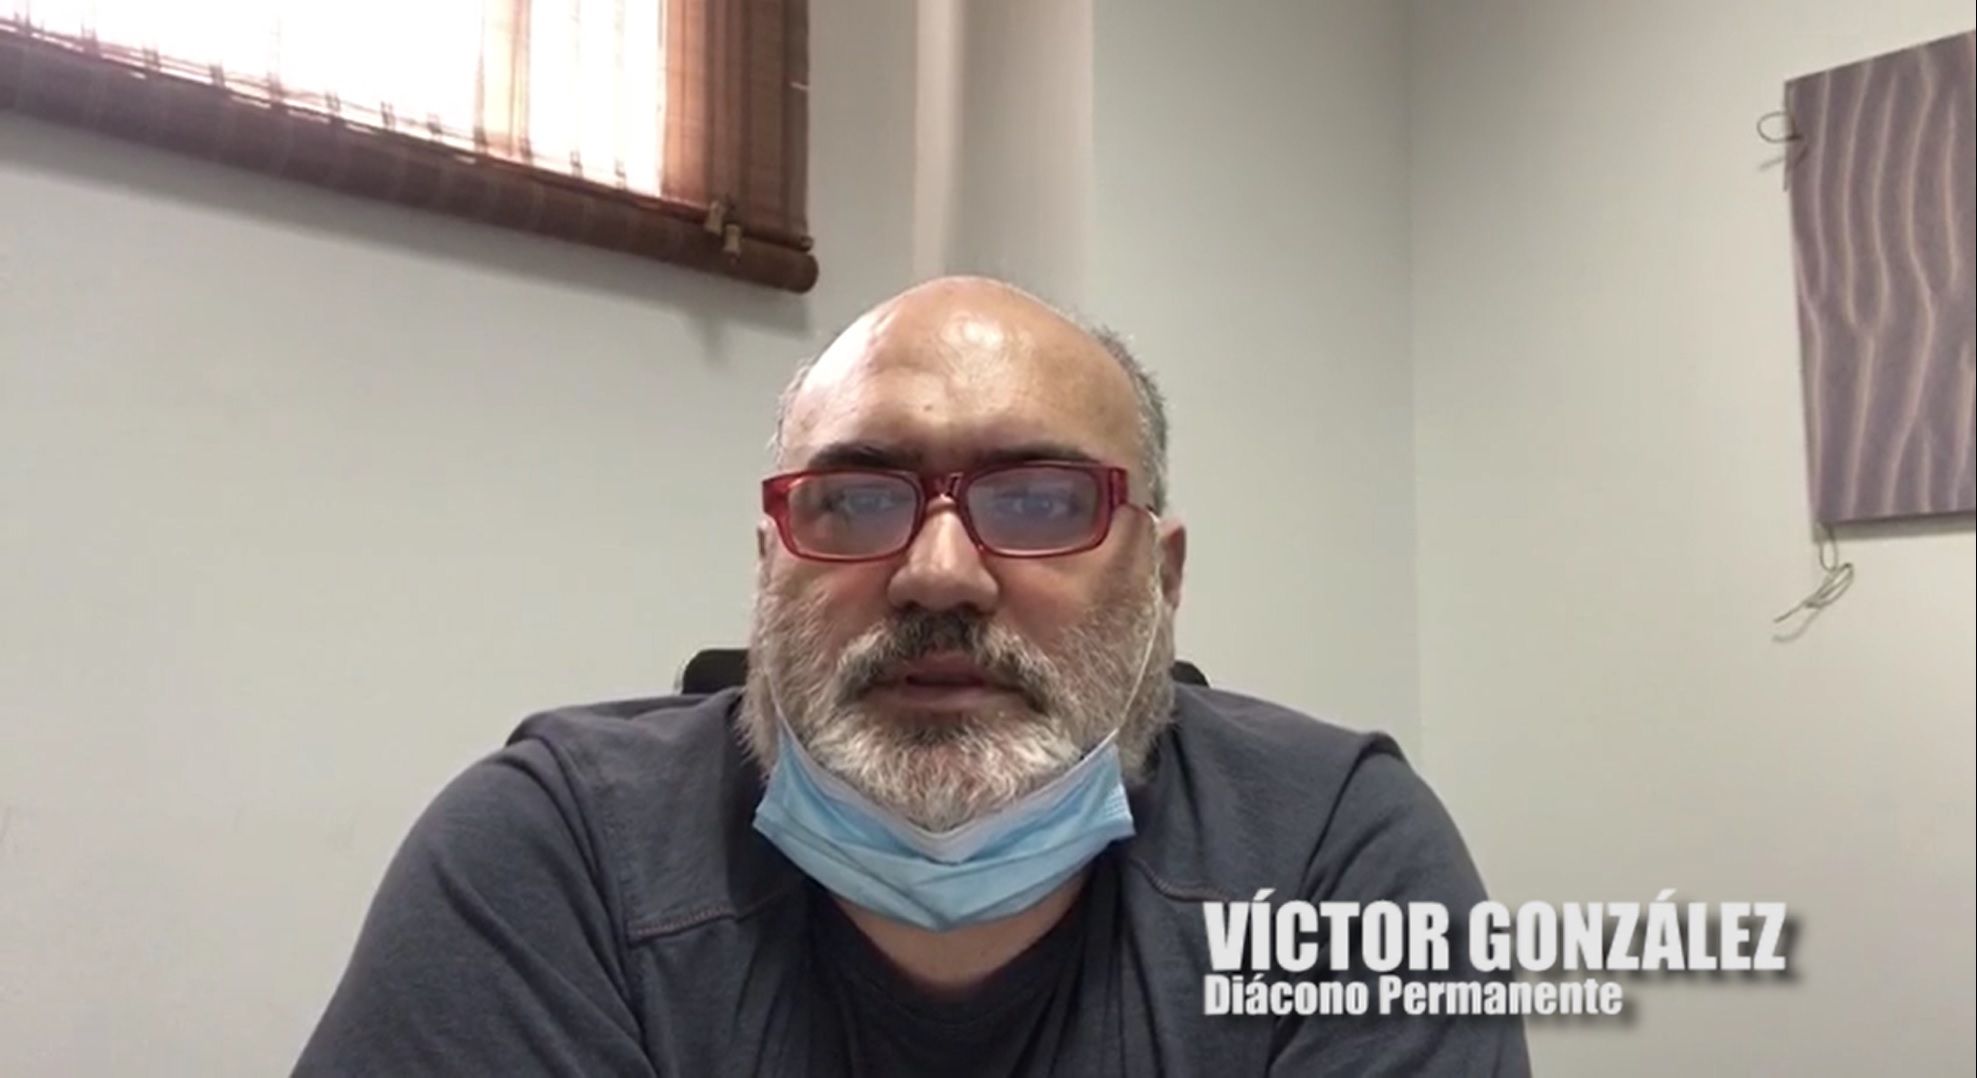 Testimonio del diácono permanente Víctor González, durante la pandemia -Tenerife, España-